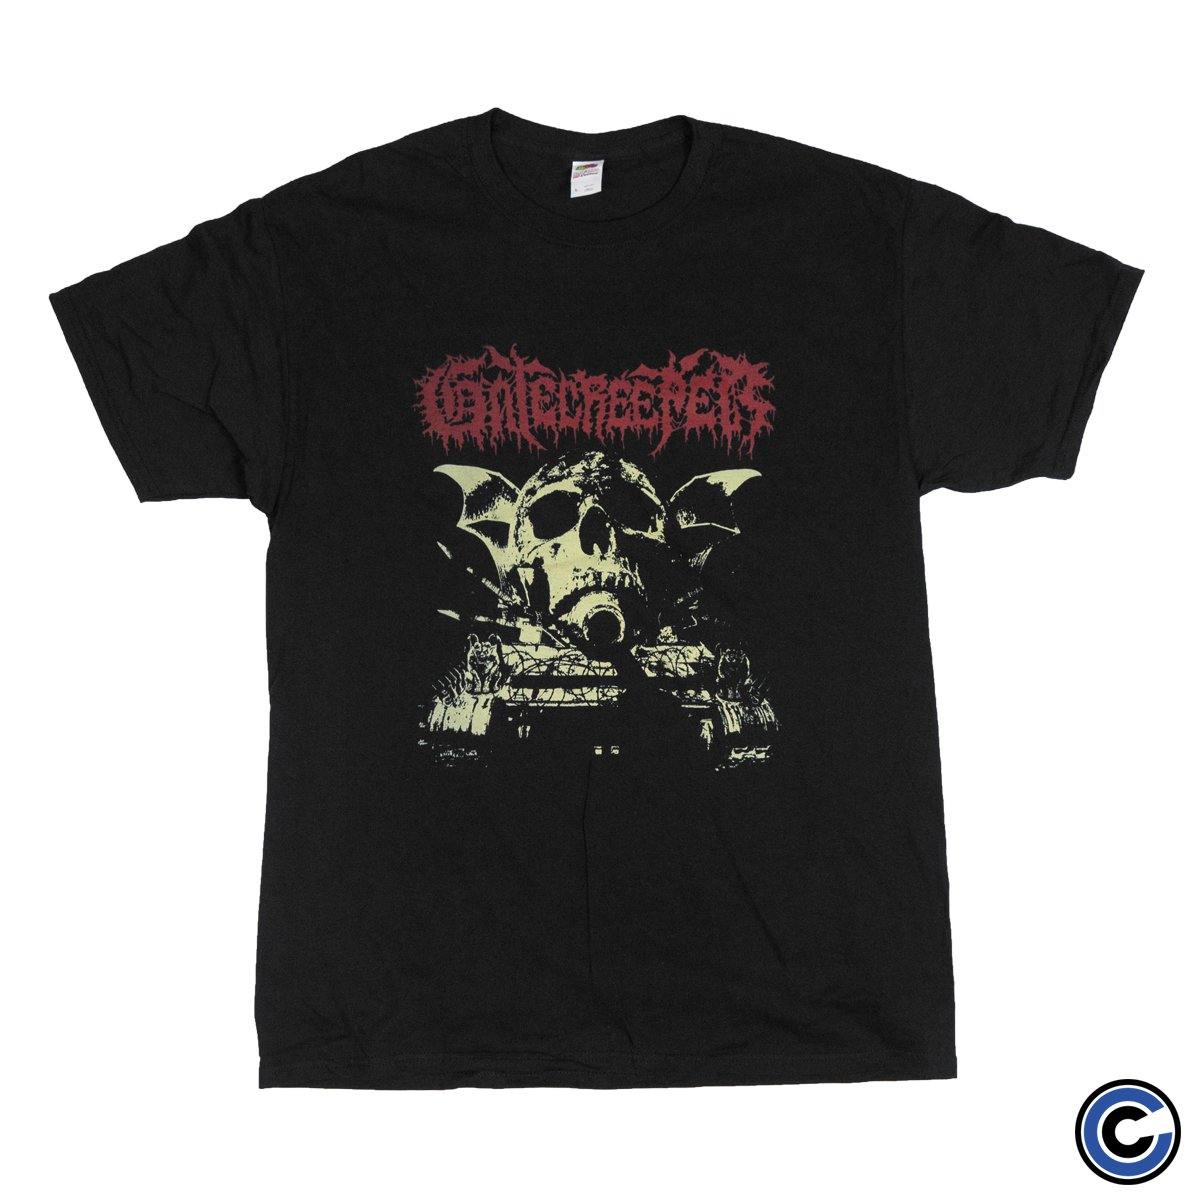 Buy – Gatecreeper "Dead Inside" Shirt – Band & Music Merch – Cold Cuts Merch